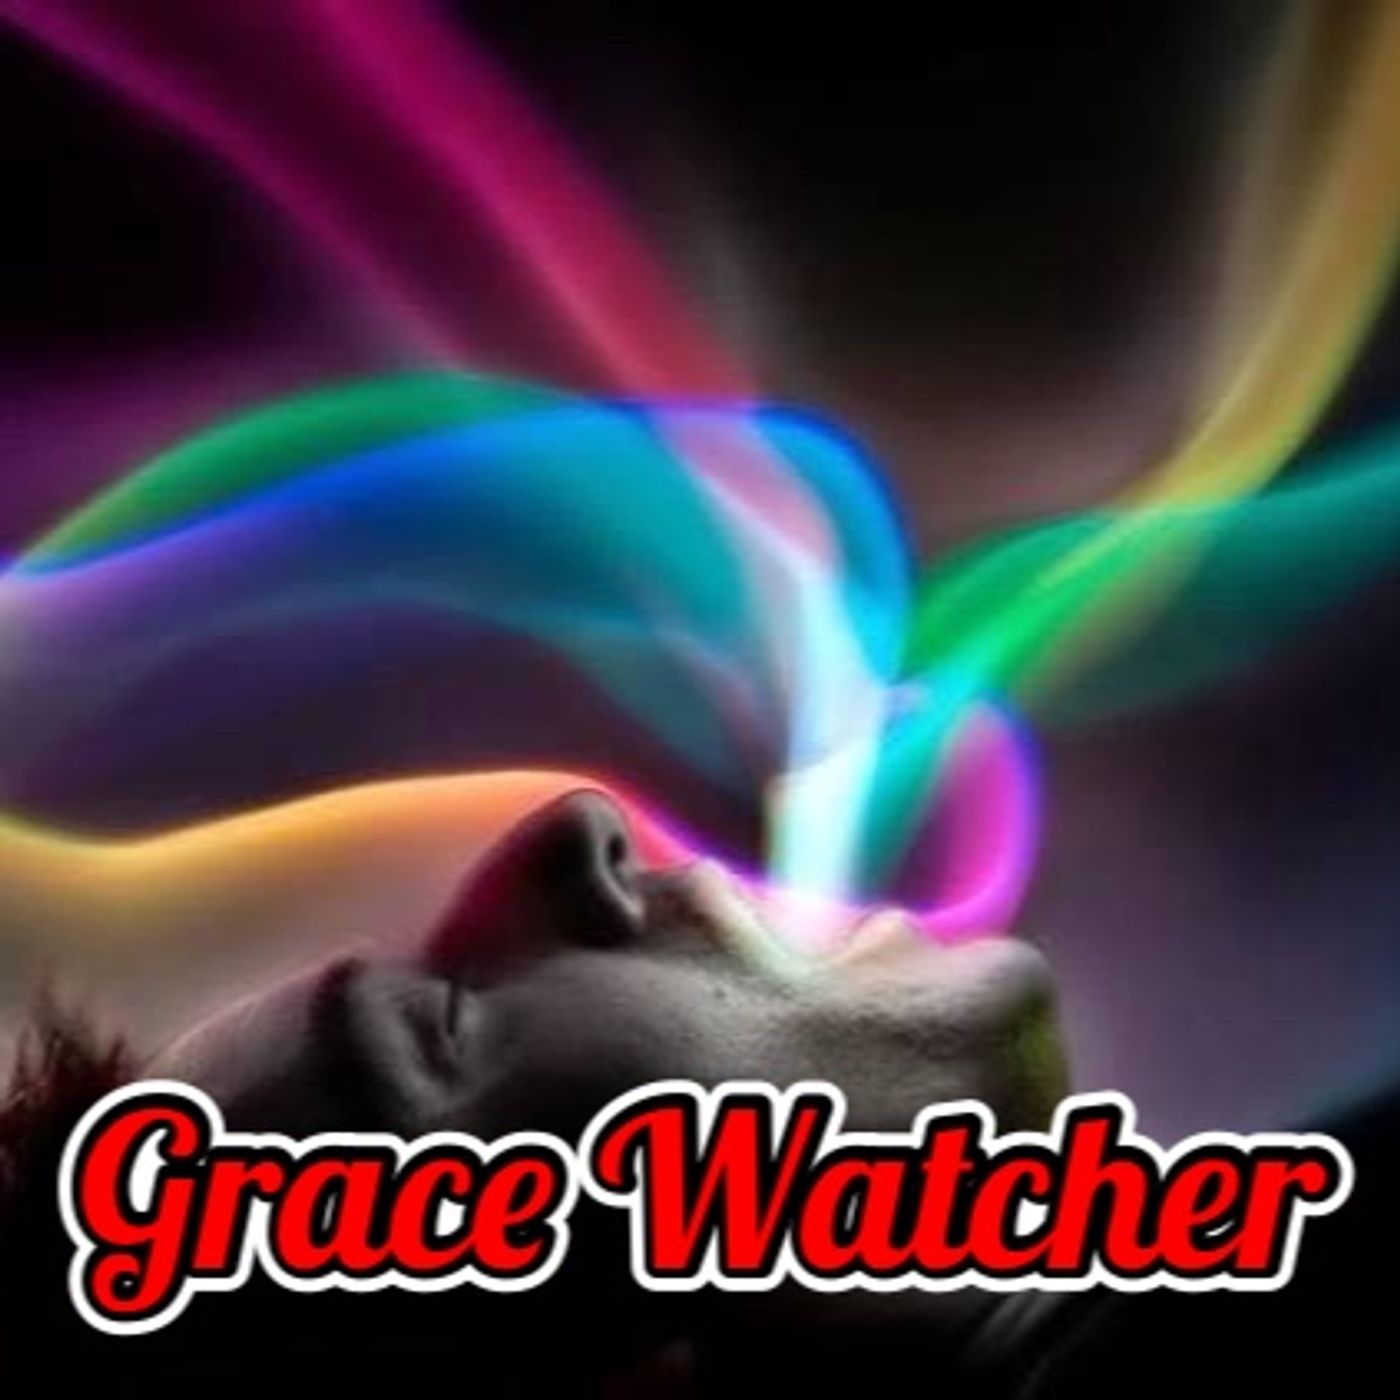 The Grace Watcher Report - God Is God